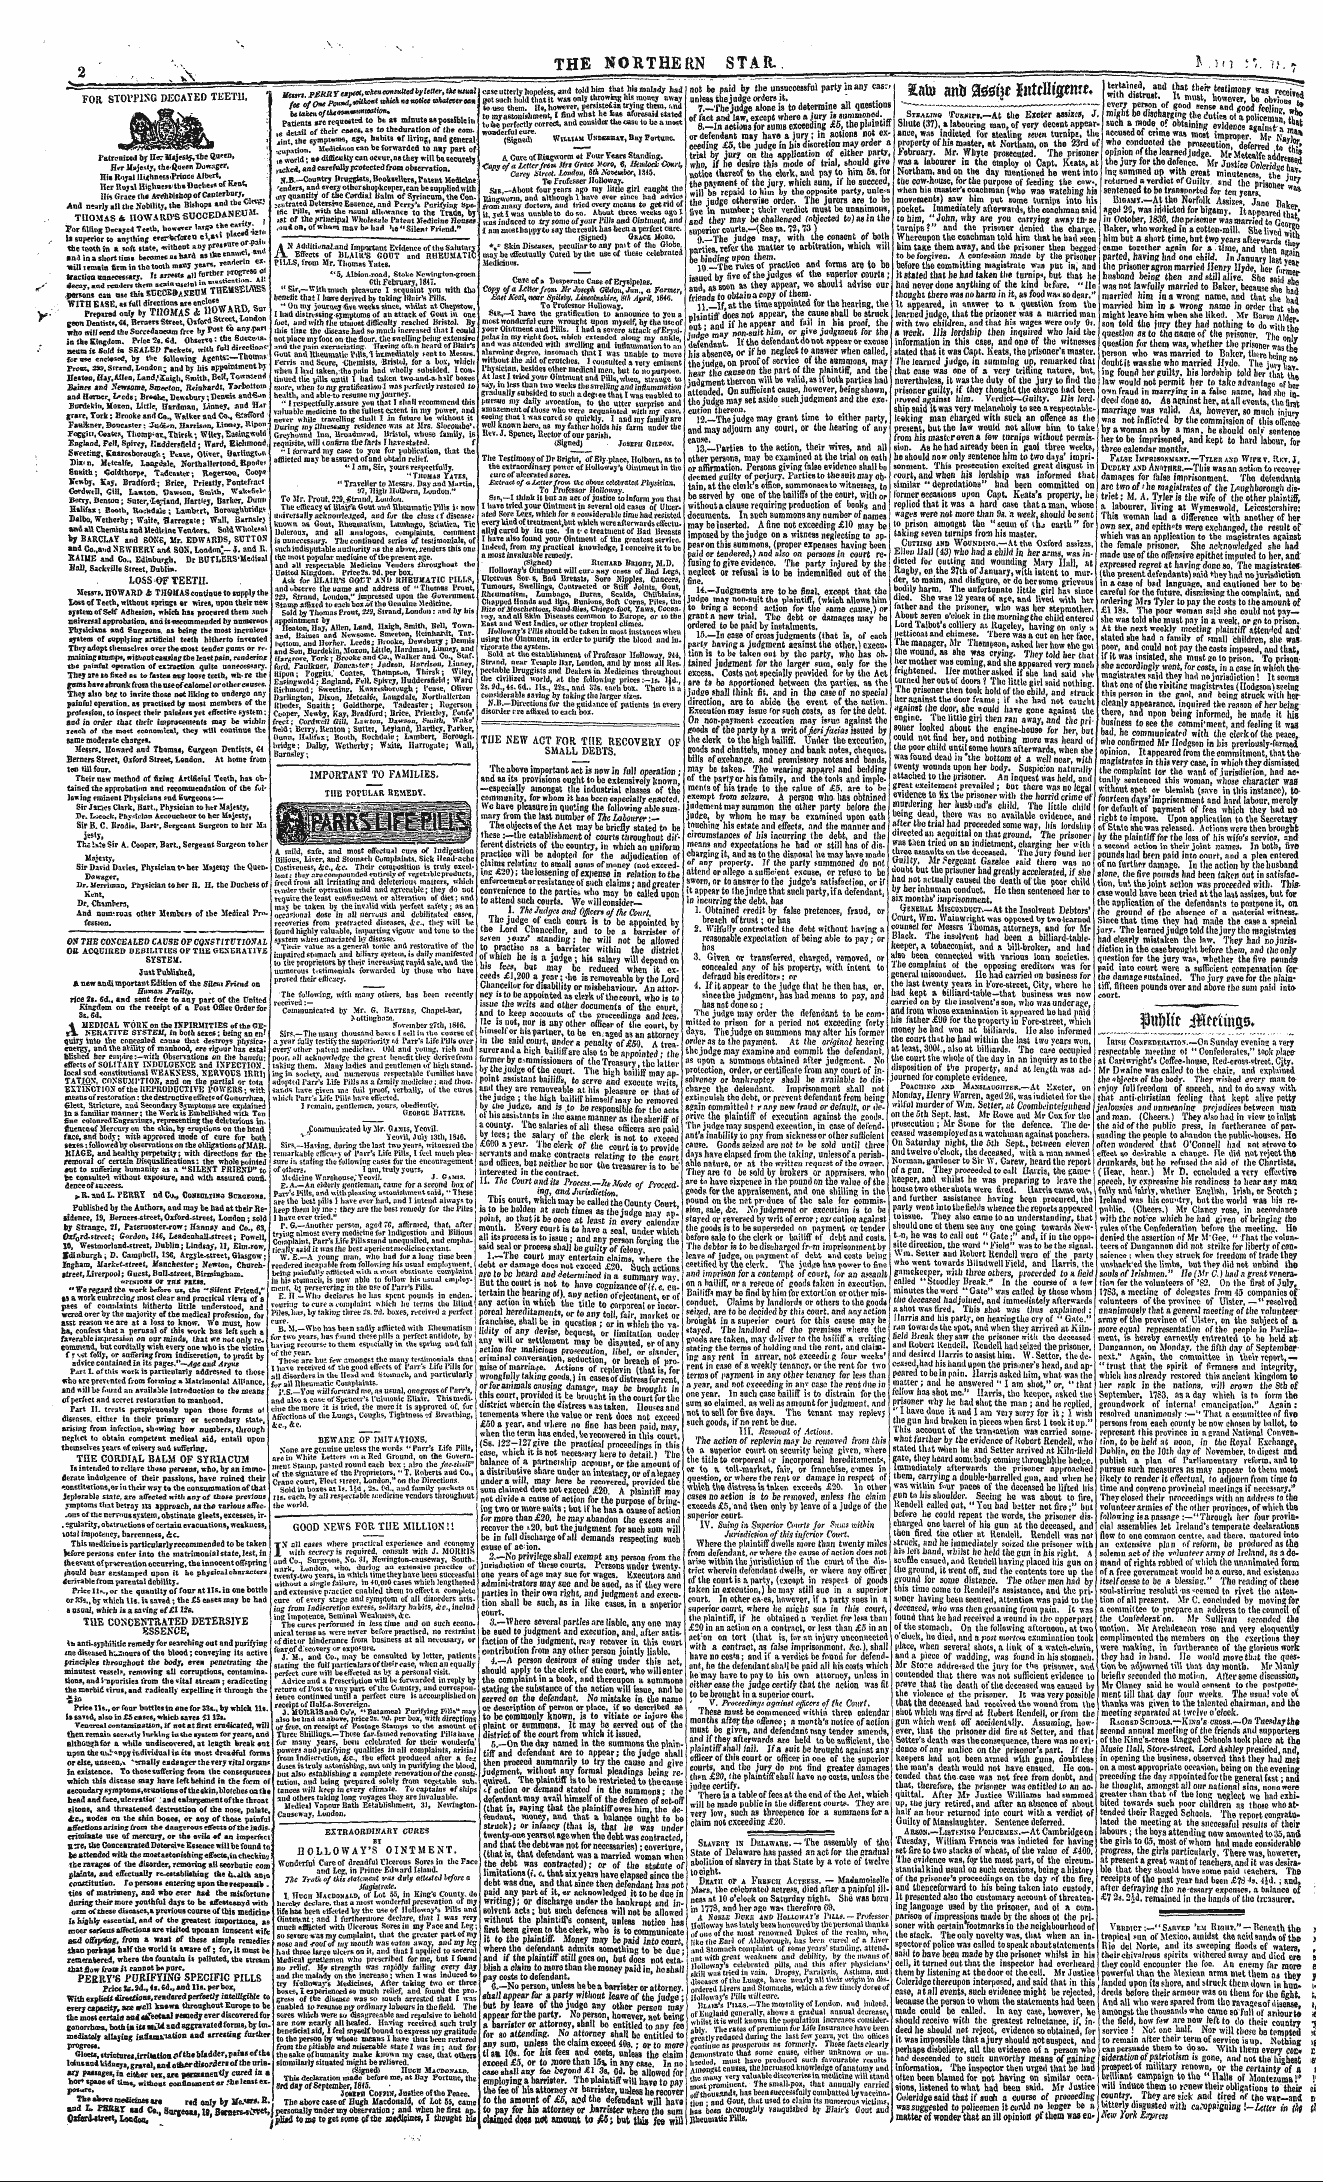 Northern Star (1837-1852): jS F Y, 2nd edition - Pwxt Ilttimss.